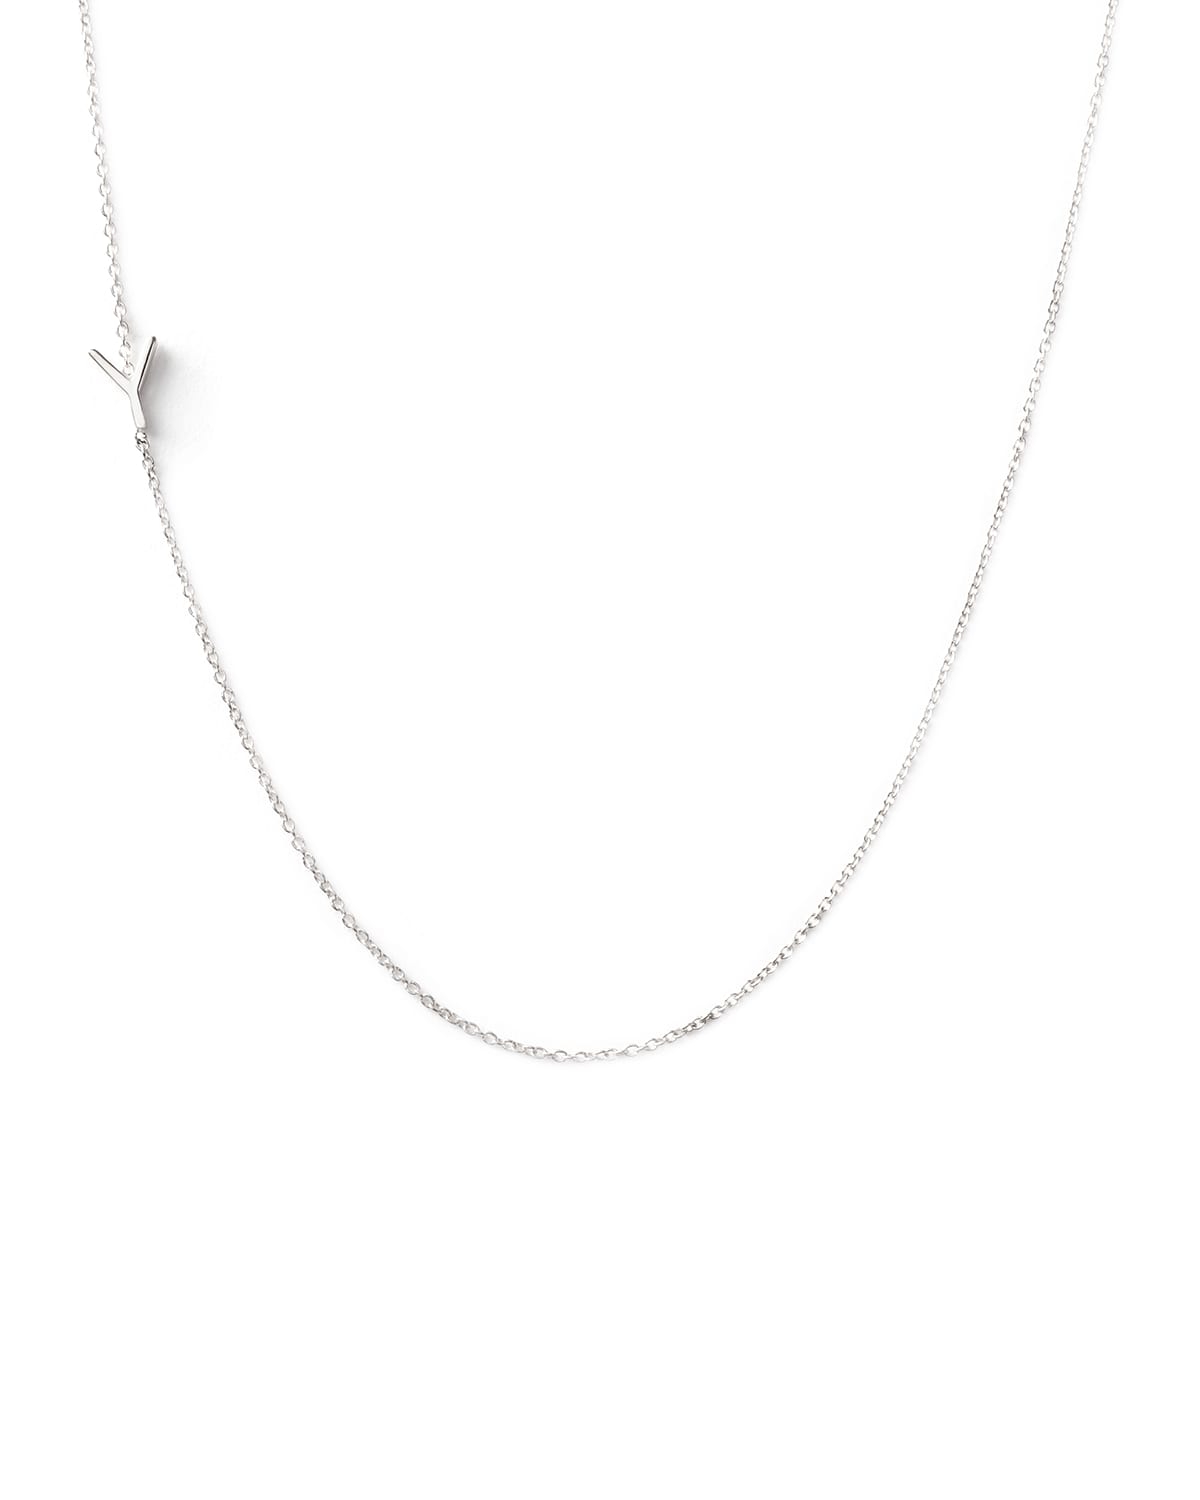 Maya Brenner Designs 14k White Gold Mini Letter Necklace In Y